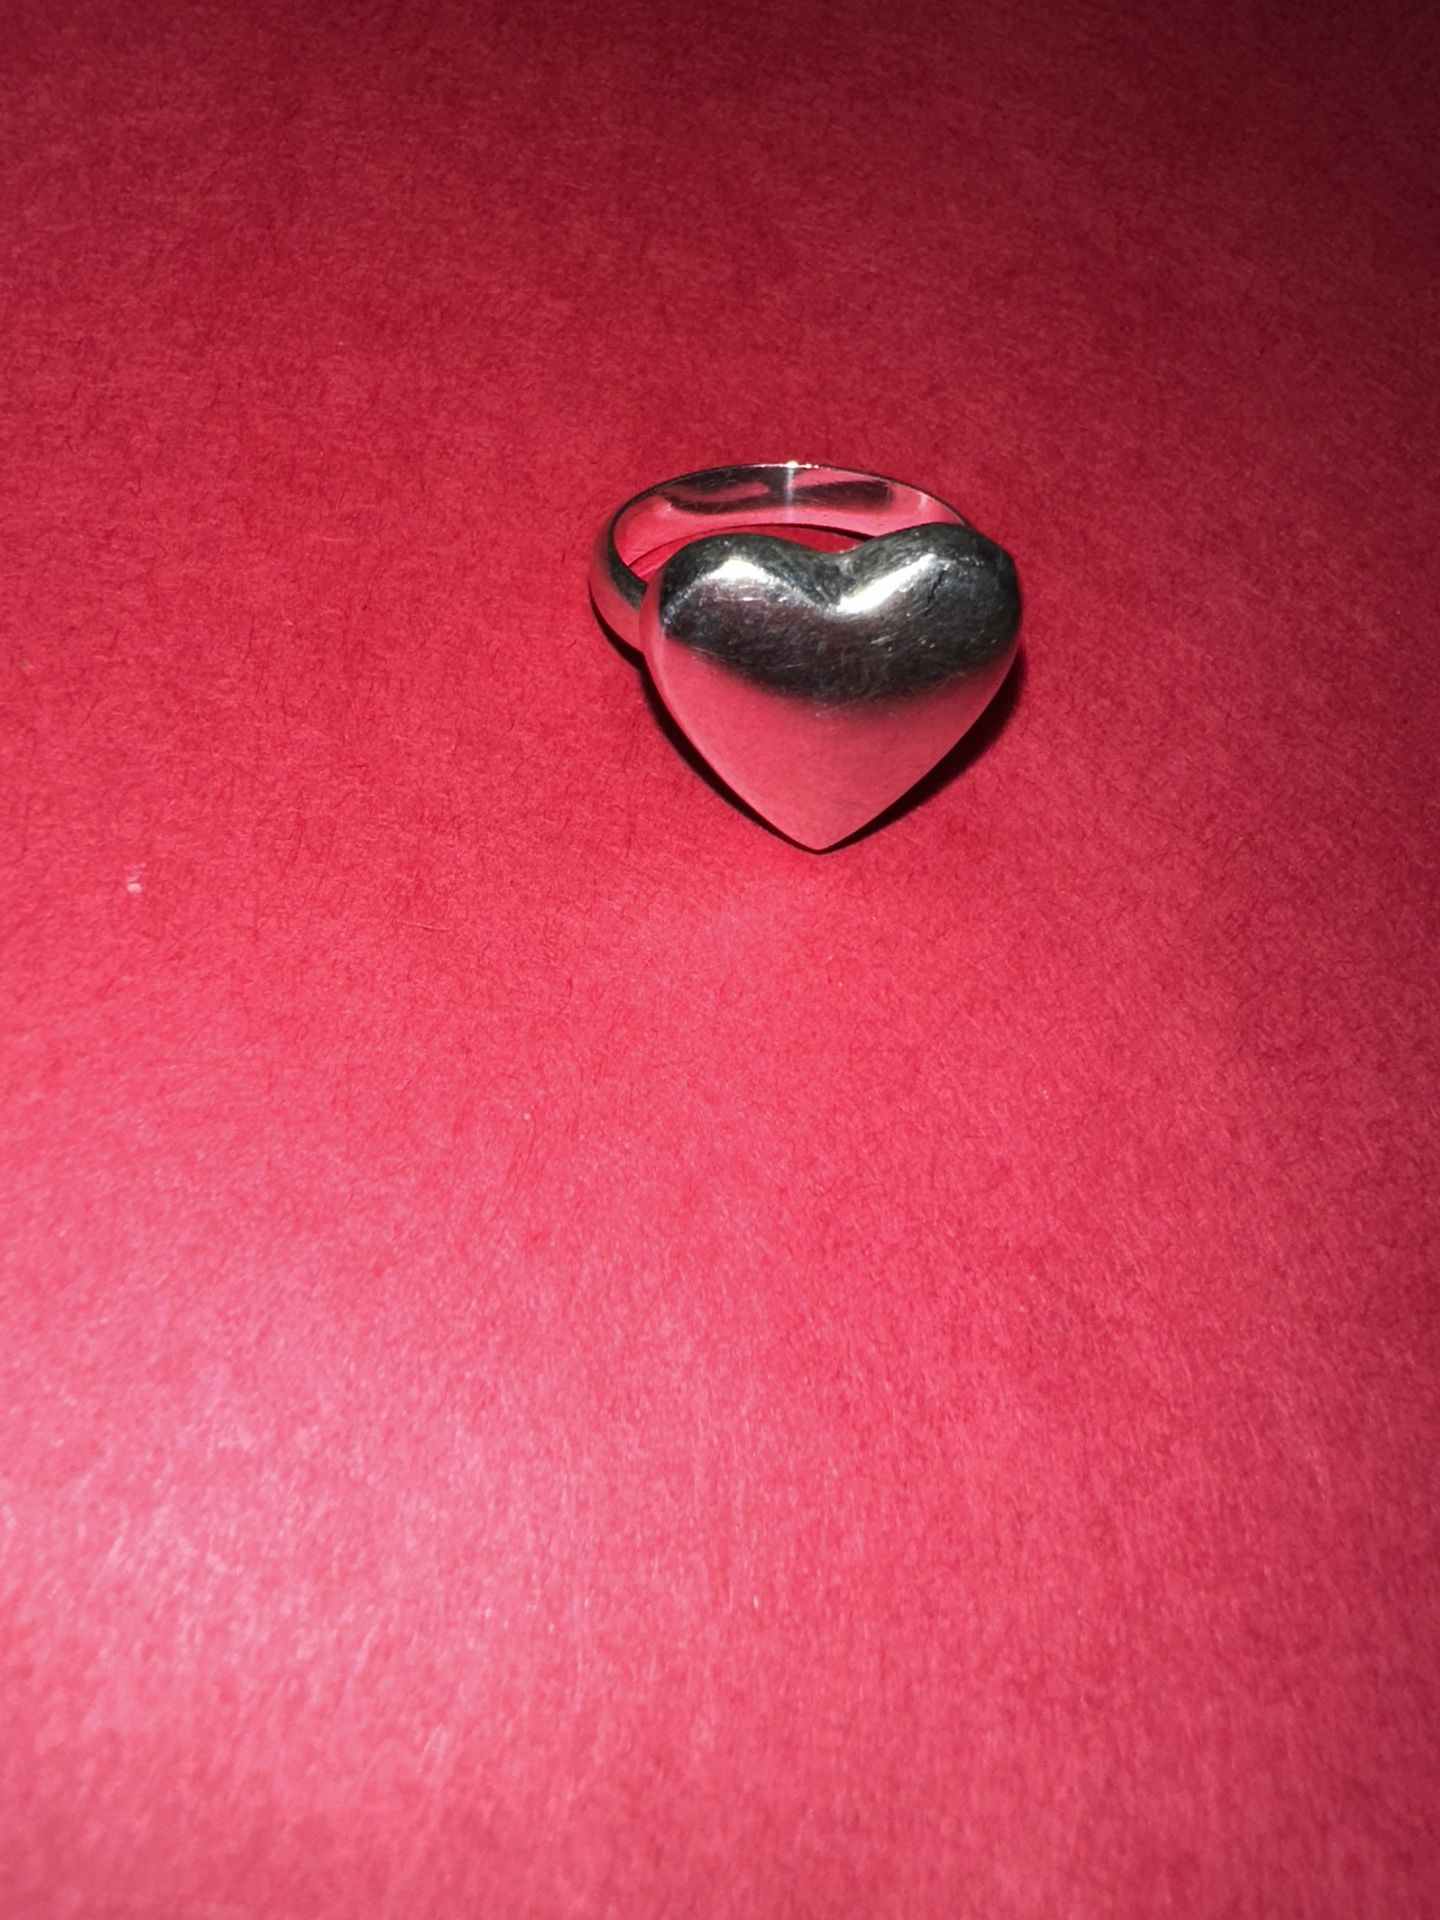 Vintage Heart Ring 